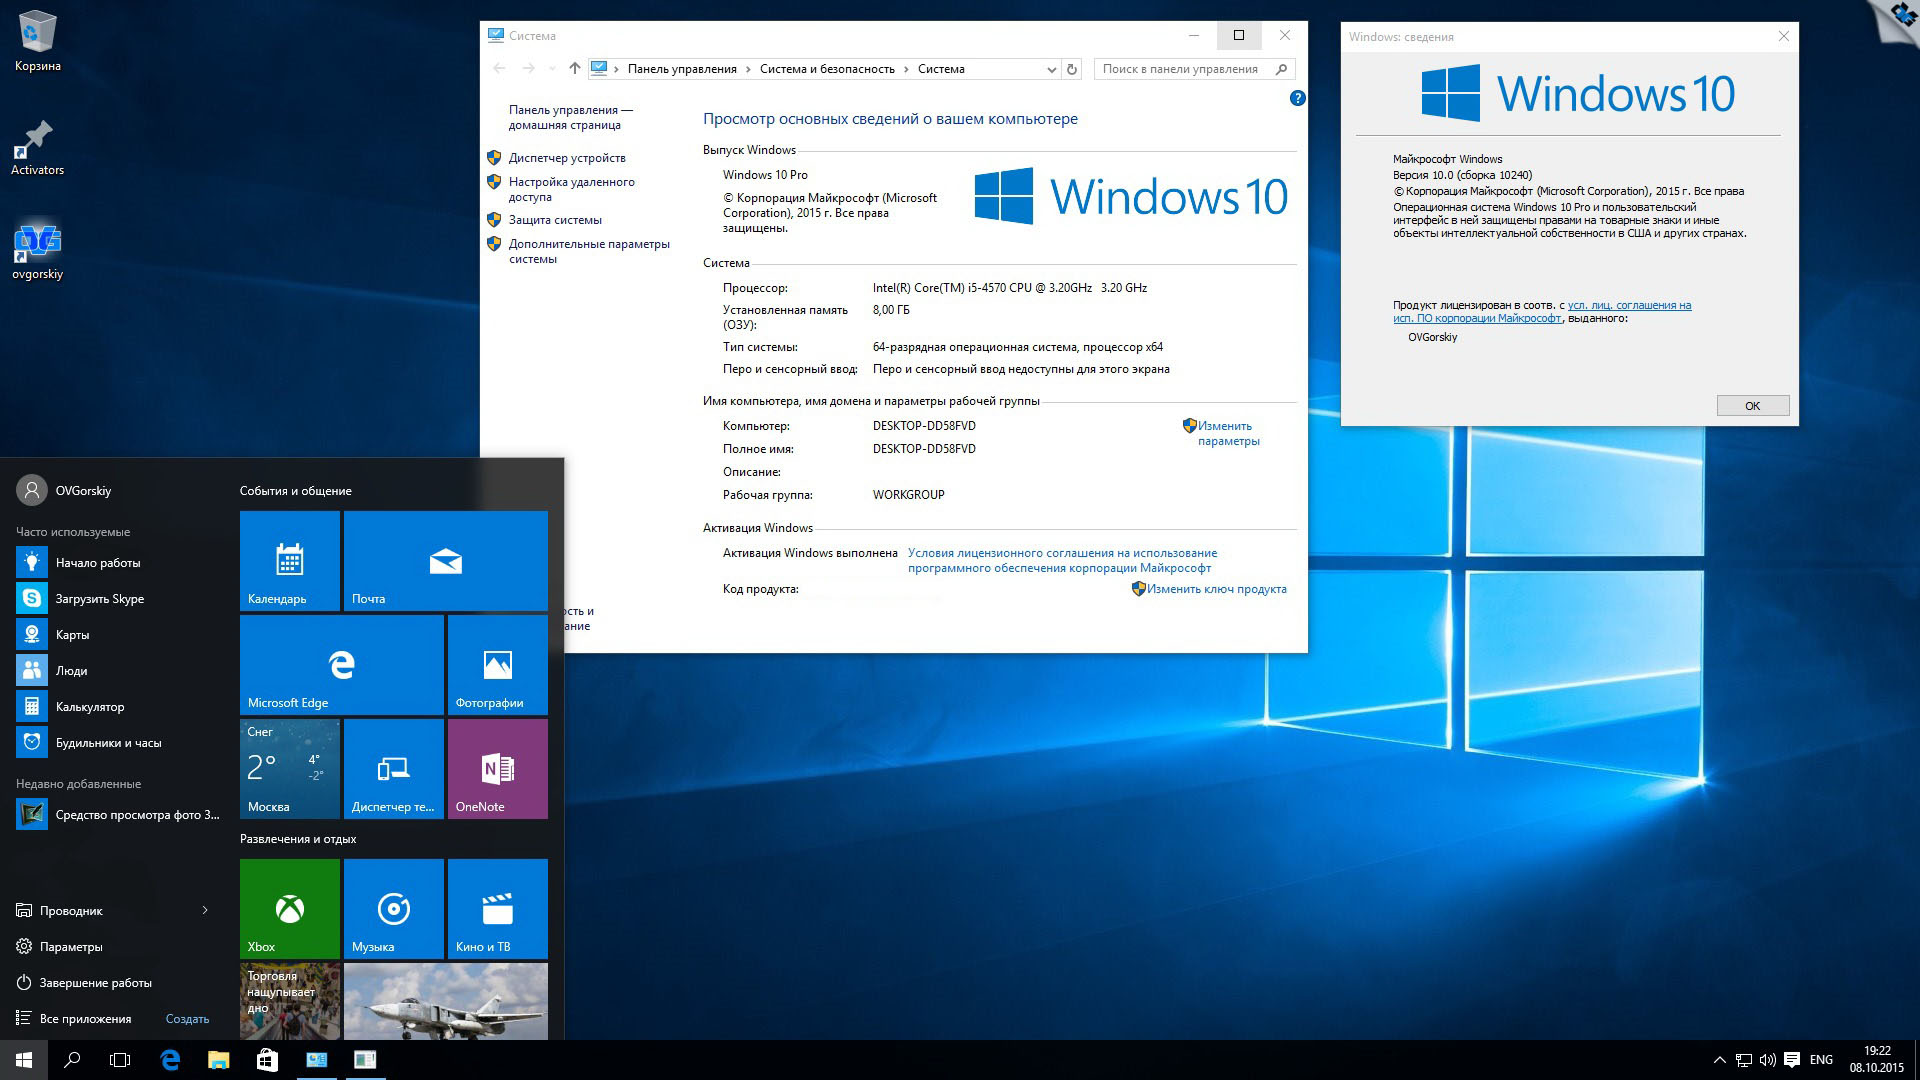 Виндовс 10 зверь. Оперативная система виндовс 10. Первая версия виндовс 10. Microsoft Windows 10 Pro. Windows 10 2015 года.